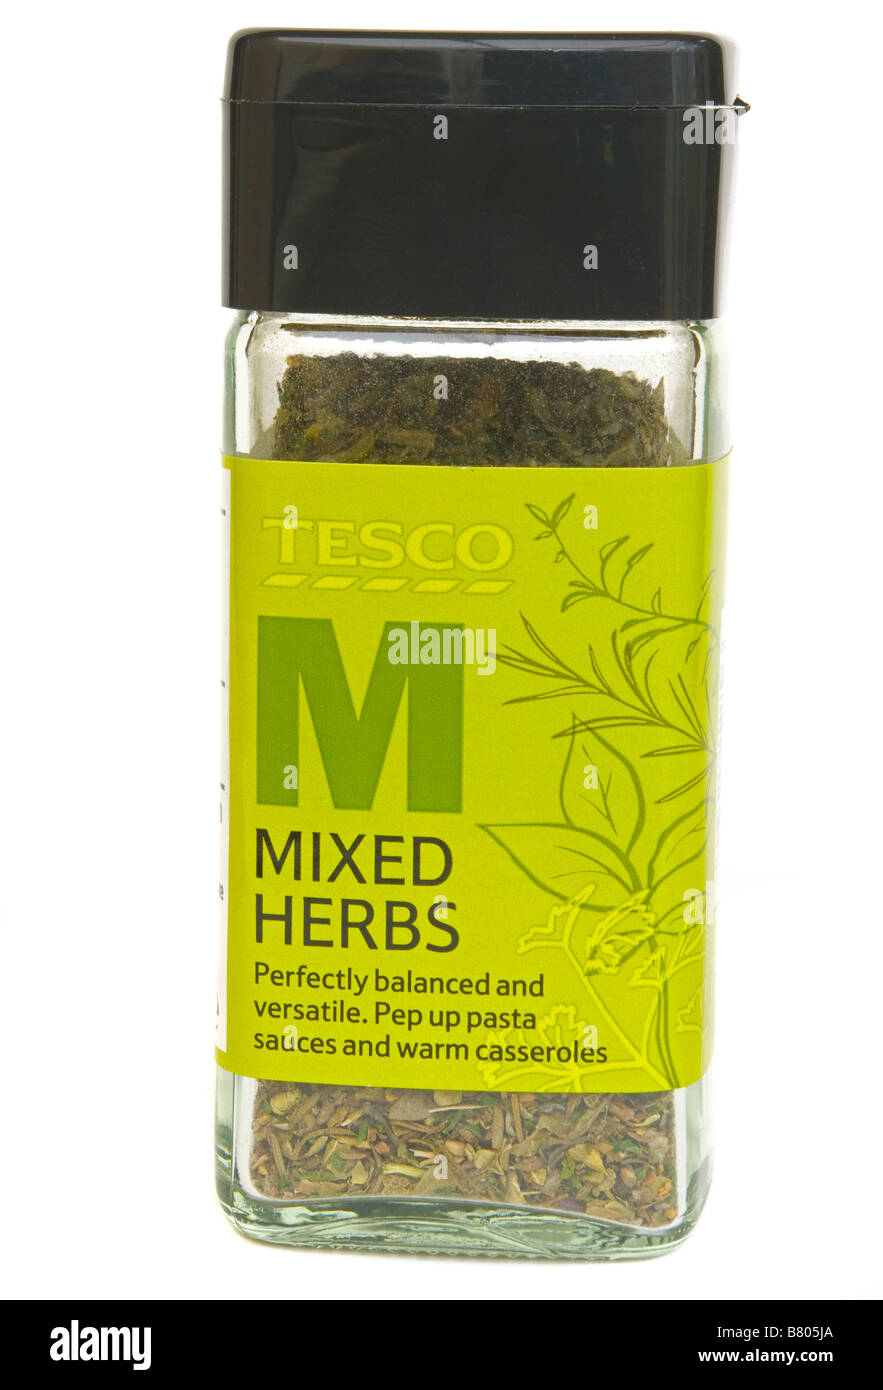 Glass Jar of Tesco Mixed Herbs Tesco products Stock Photo - Alamy